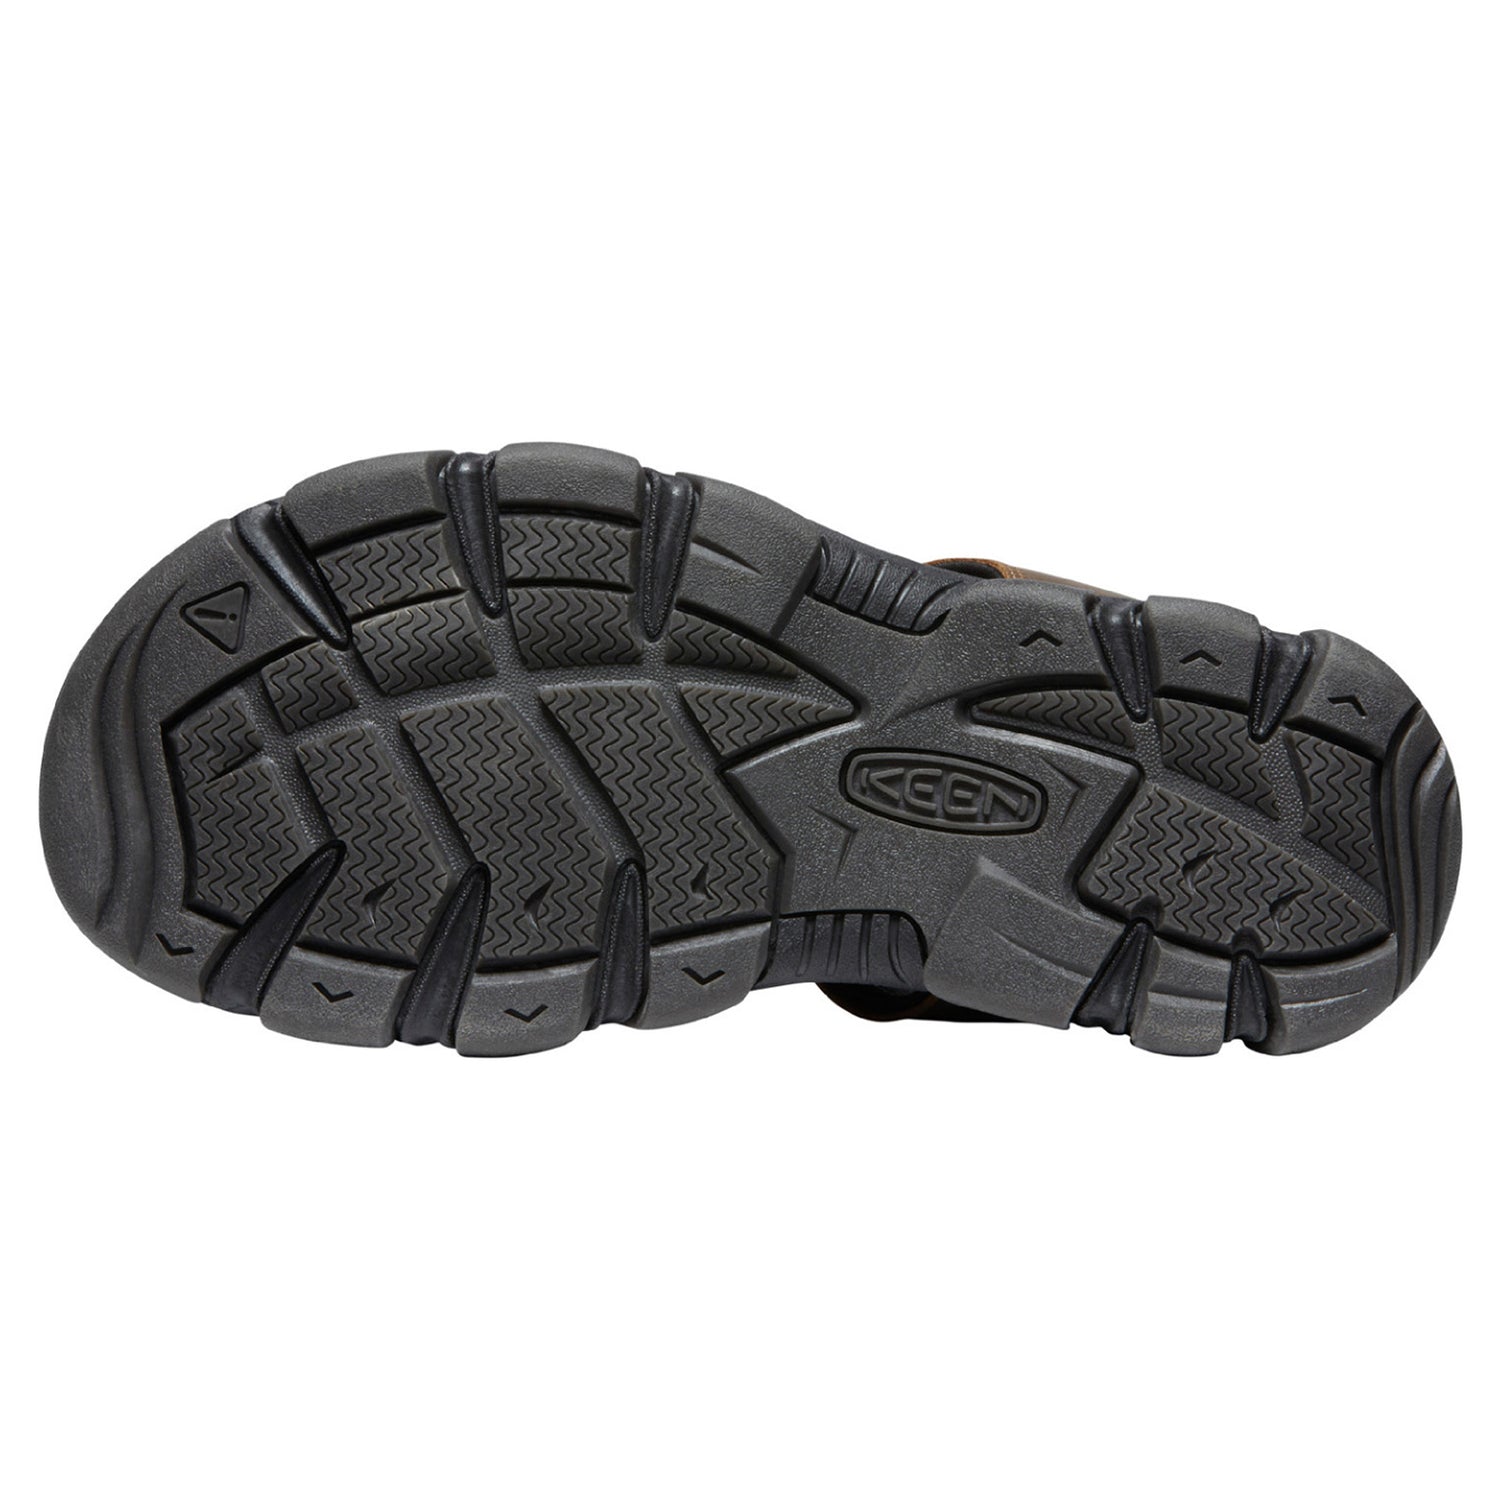 Peltz Shoes  Men's Keen Daytona II Sandal Bison/Black 1027340